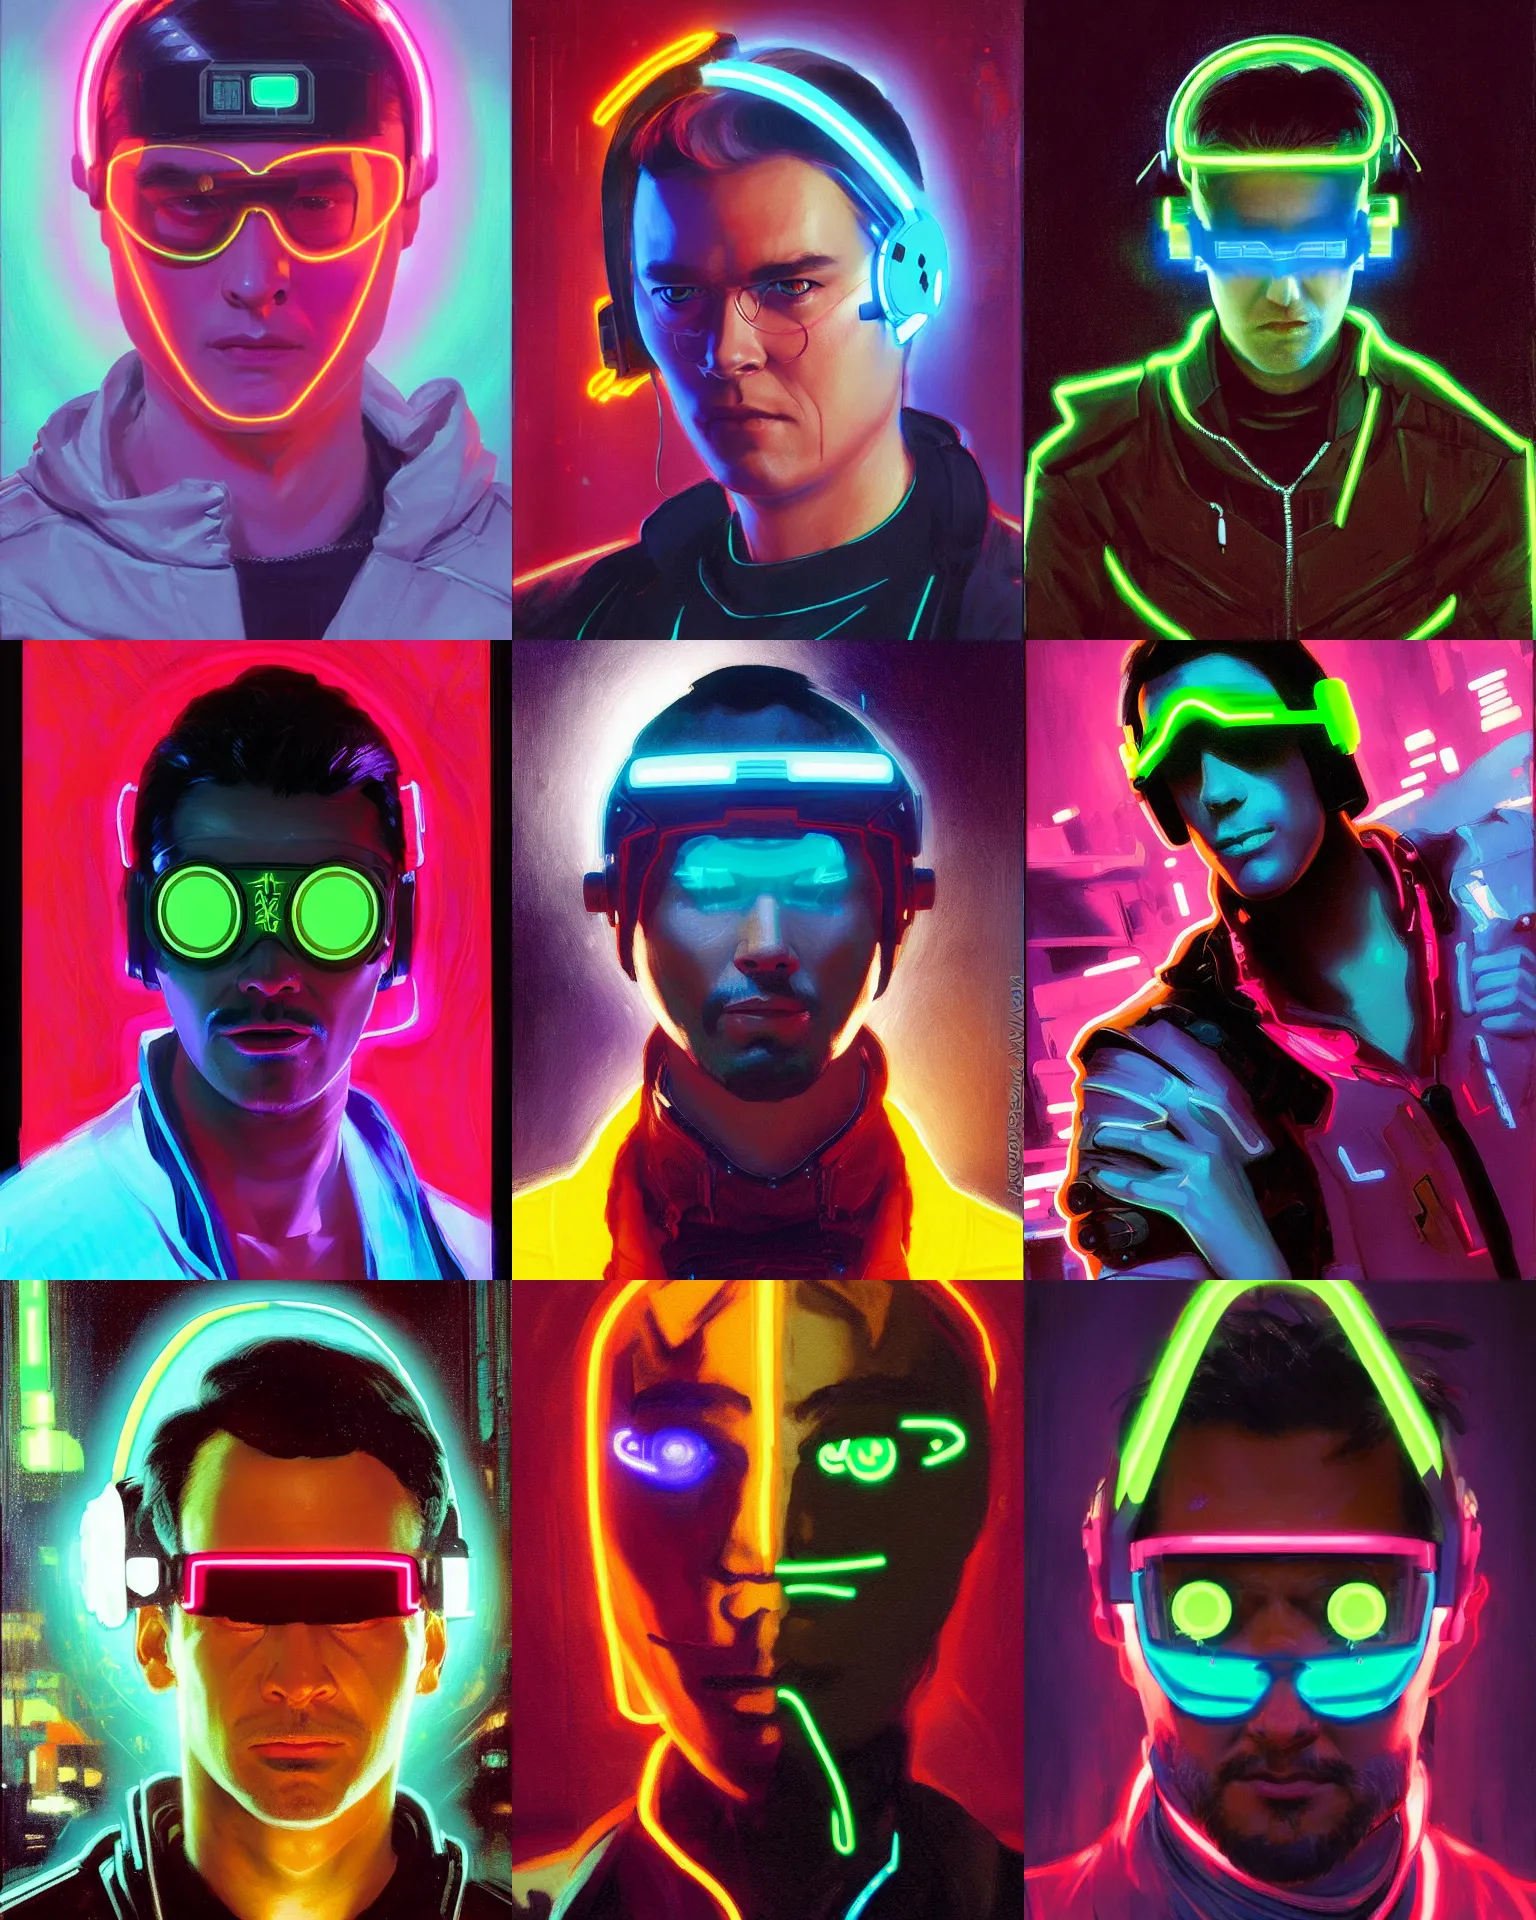 Prompt: neon cyberpunk hacker with glowing geordi visor and headset headshot portrait painting by john singer sargent, kilian eng, john berkley, hayao miyazaki, j. c. leyendecker, mead schaeffer fashion photography